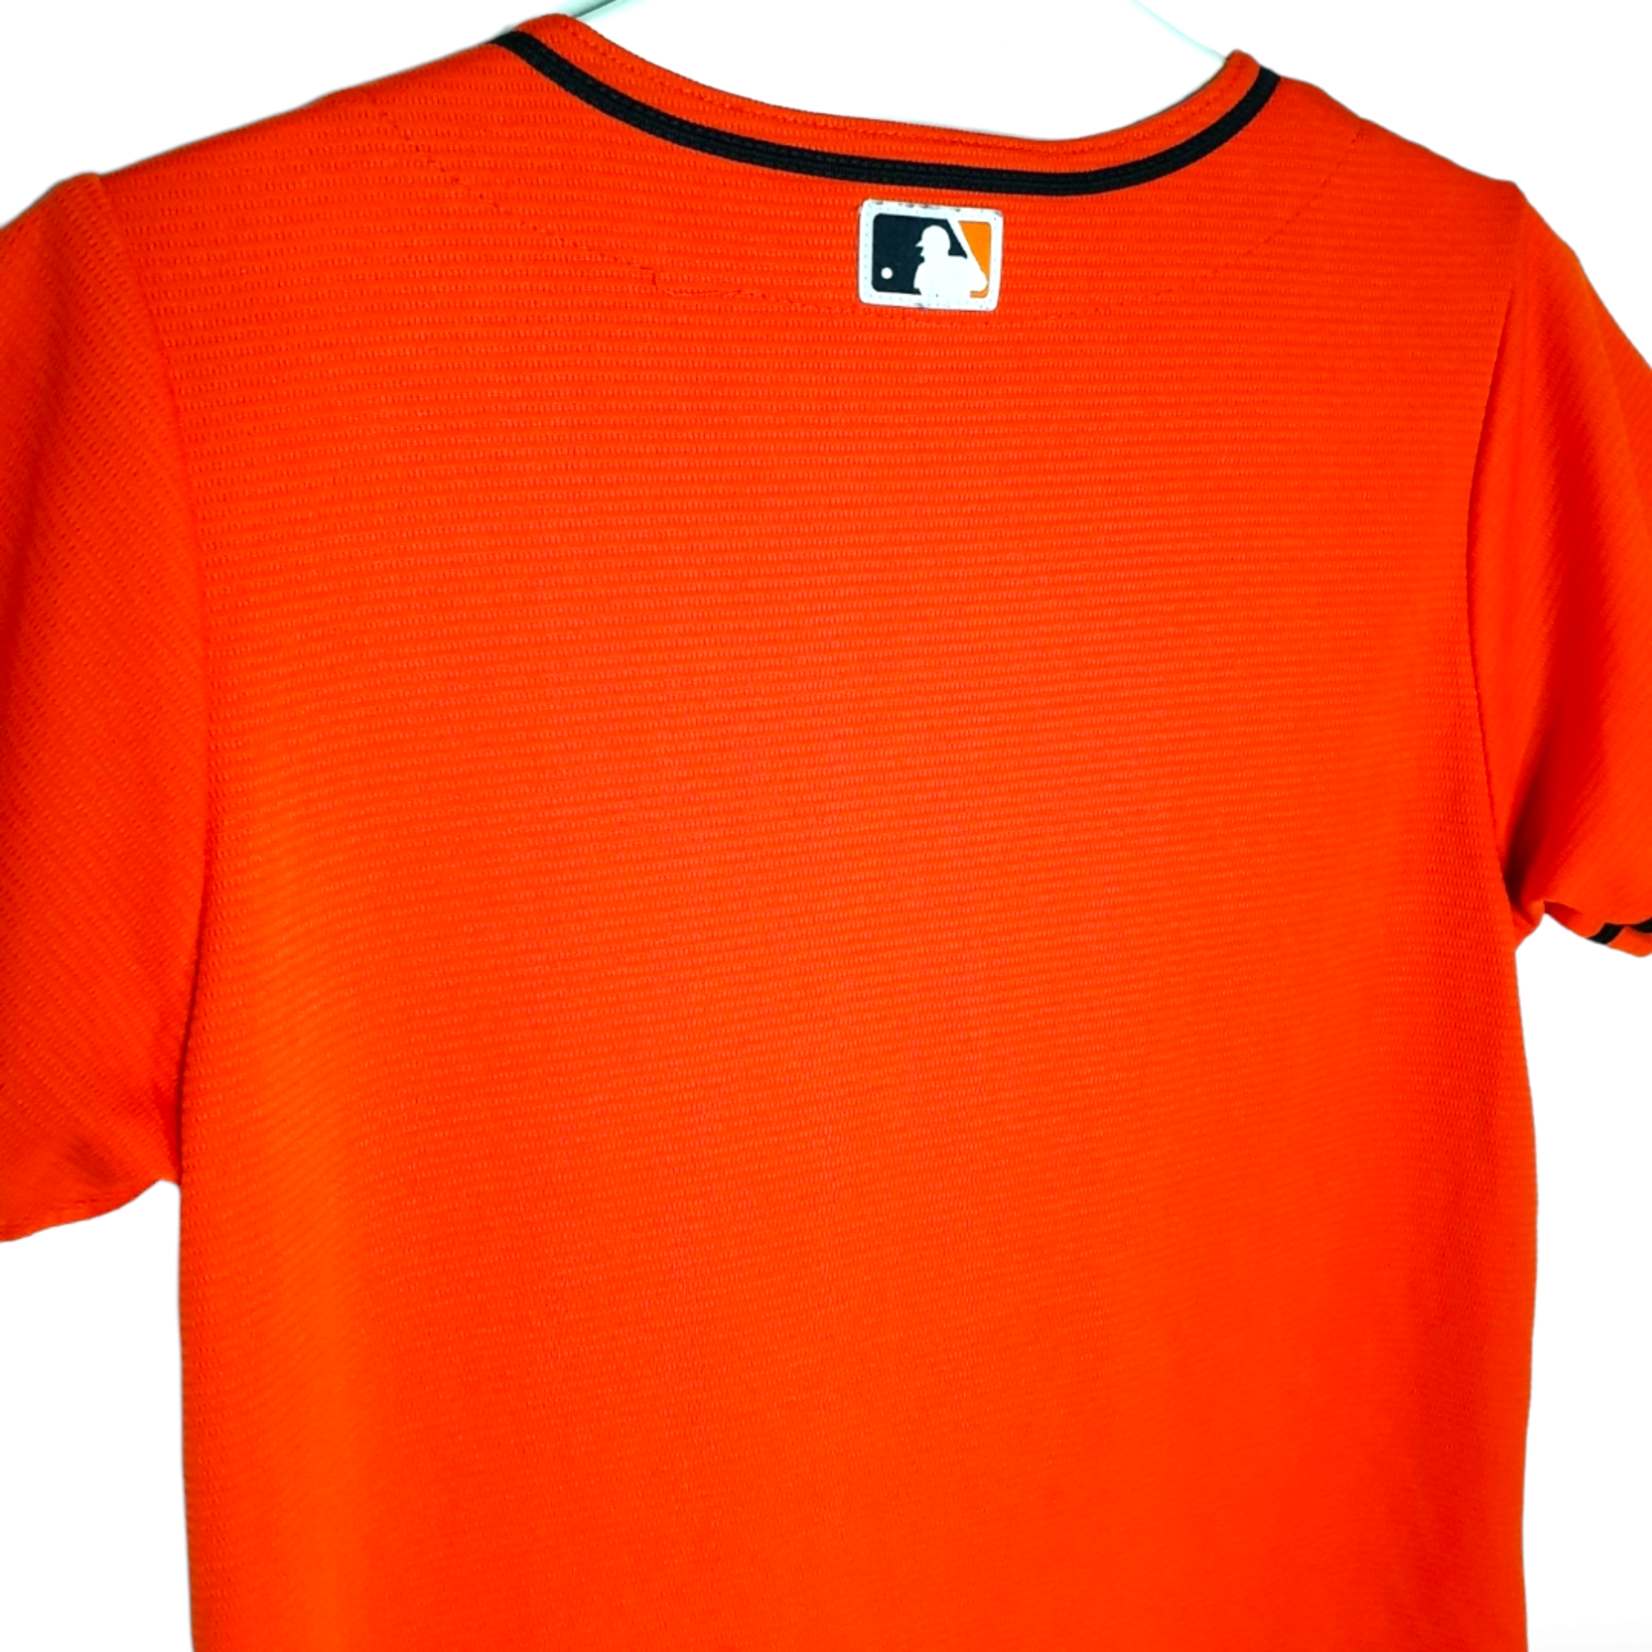 Majestic vintage baseball jersey Miami Marlins - We Love Sports Shirts